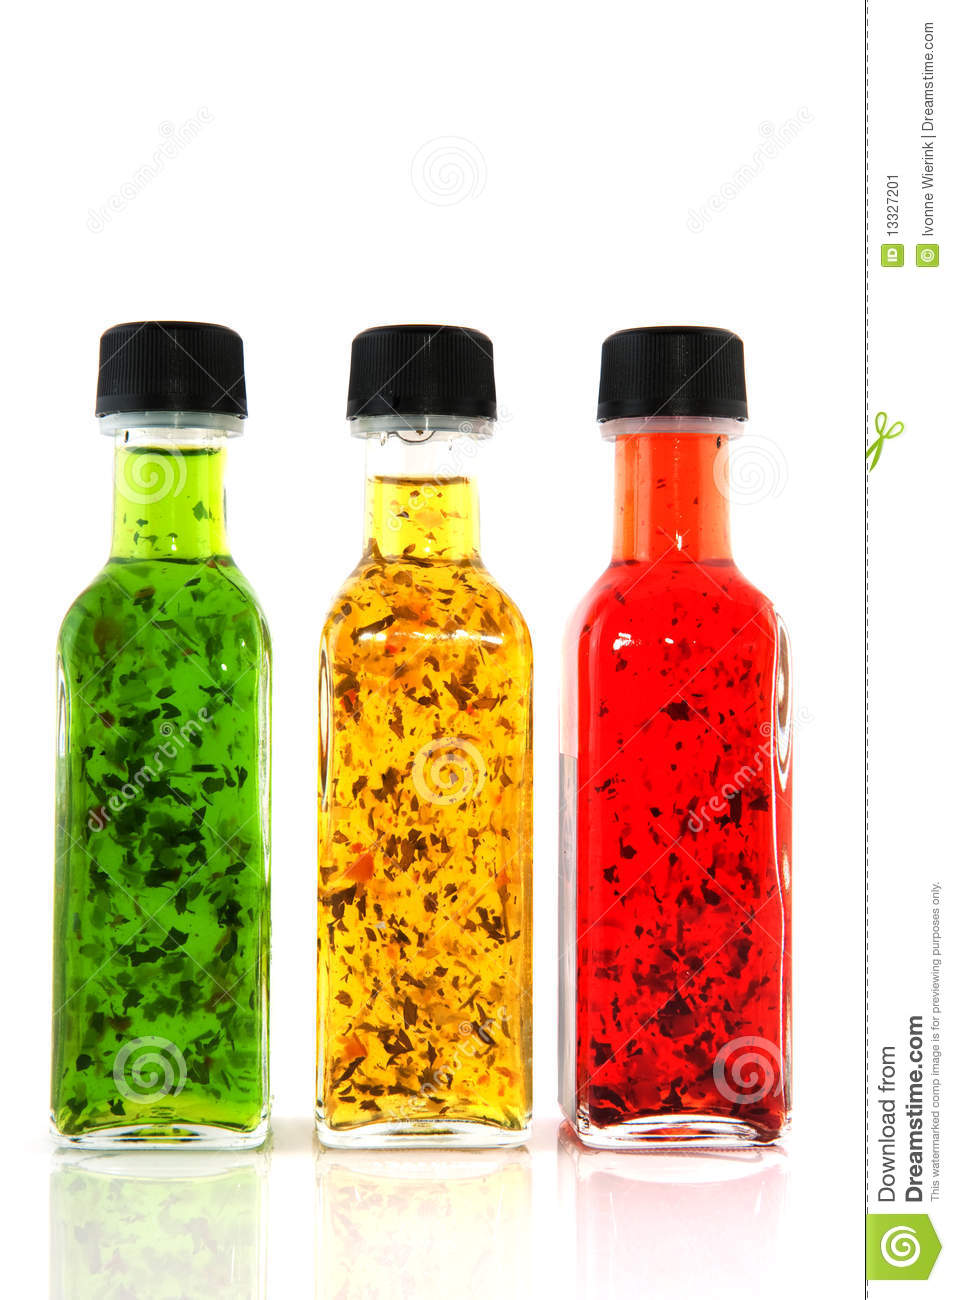 Salad Dressing Stock Image   Image  13327201